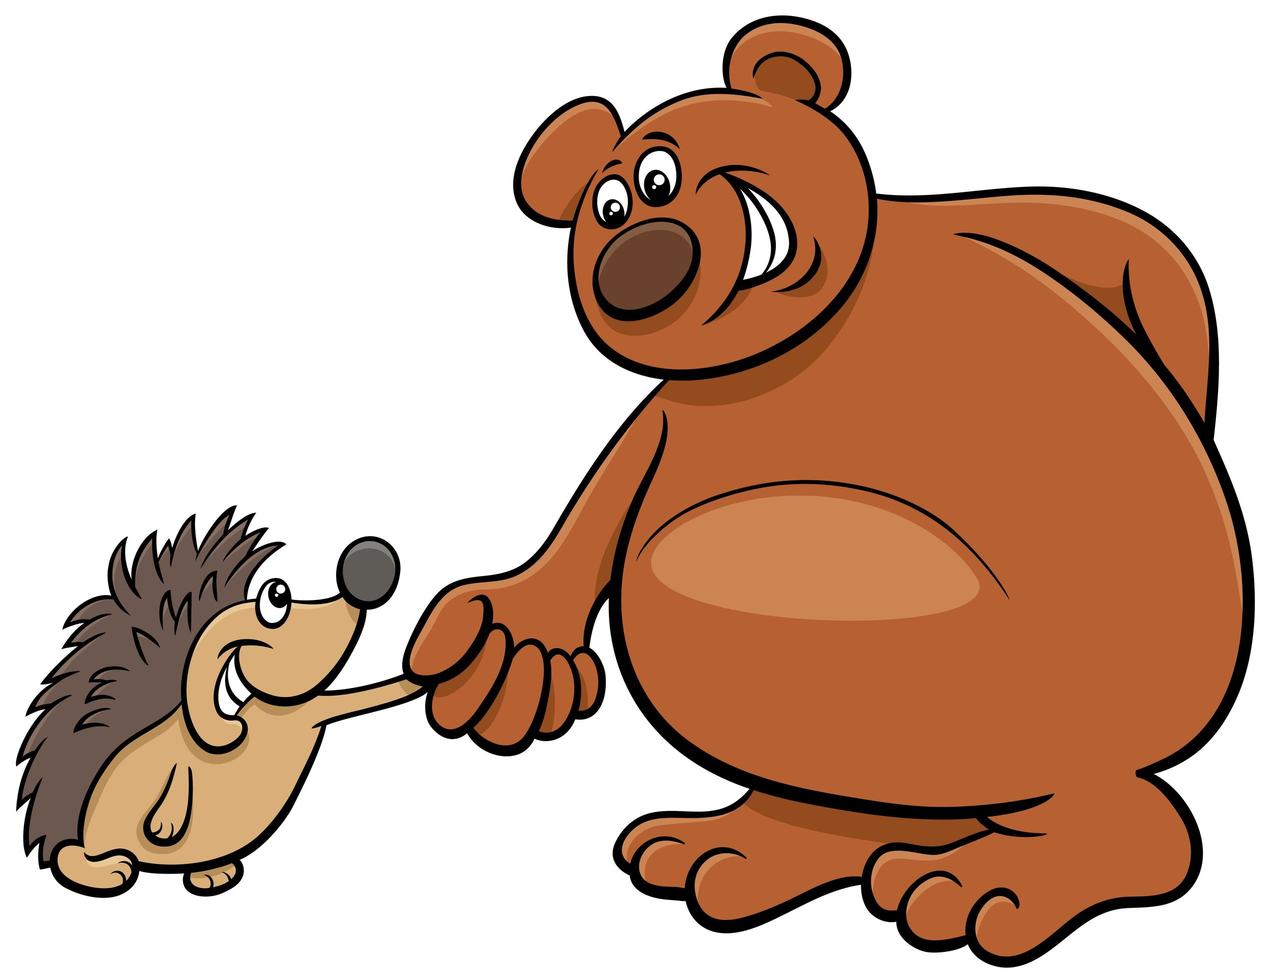 Bear and hedgehog cartoon animal characters vector